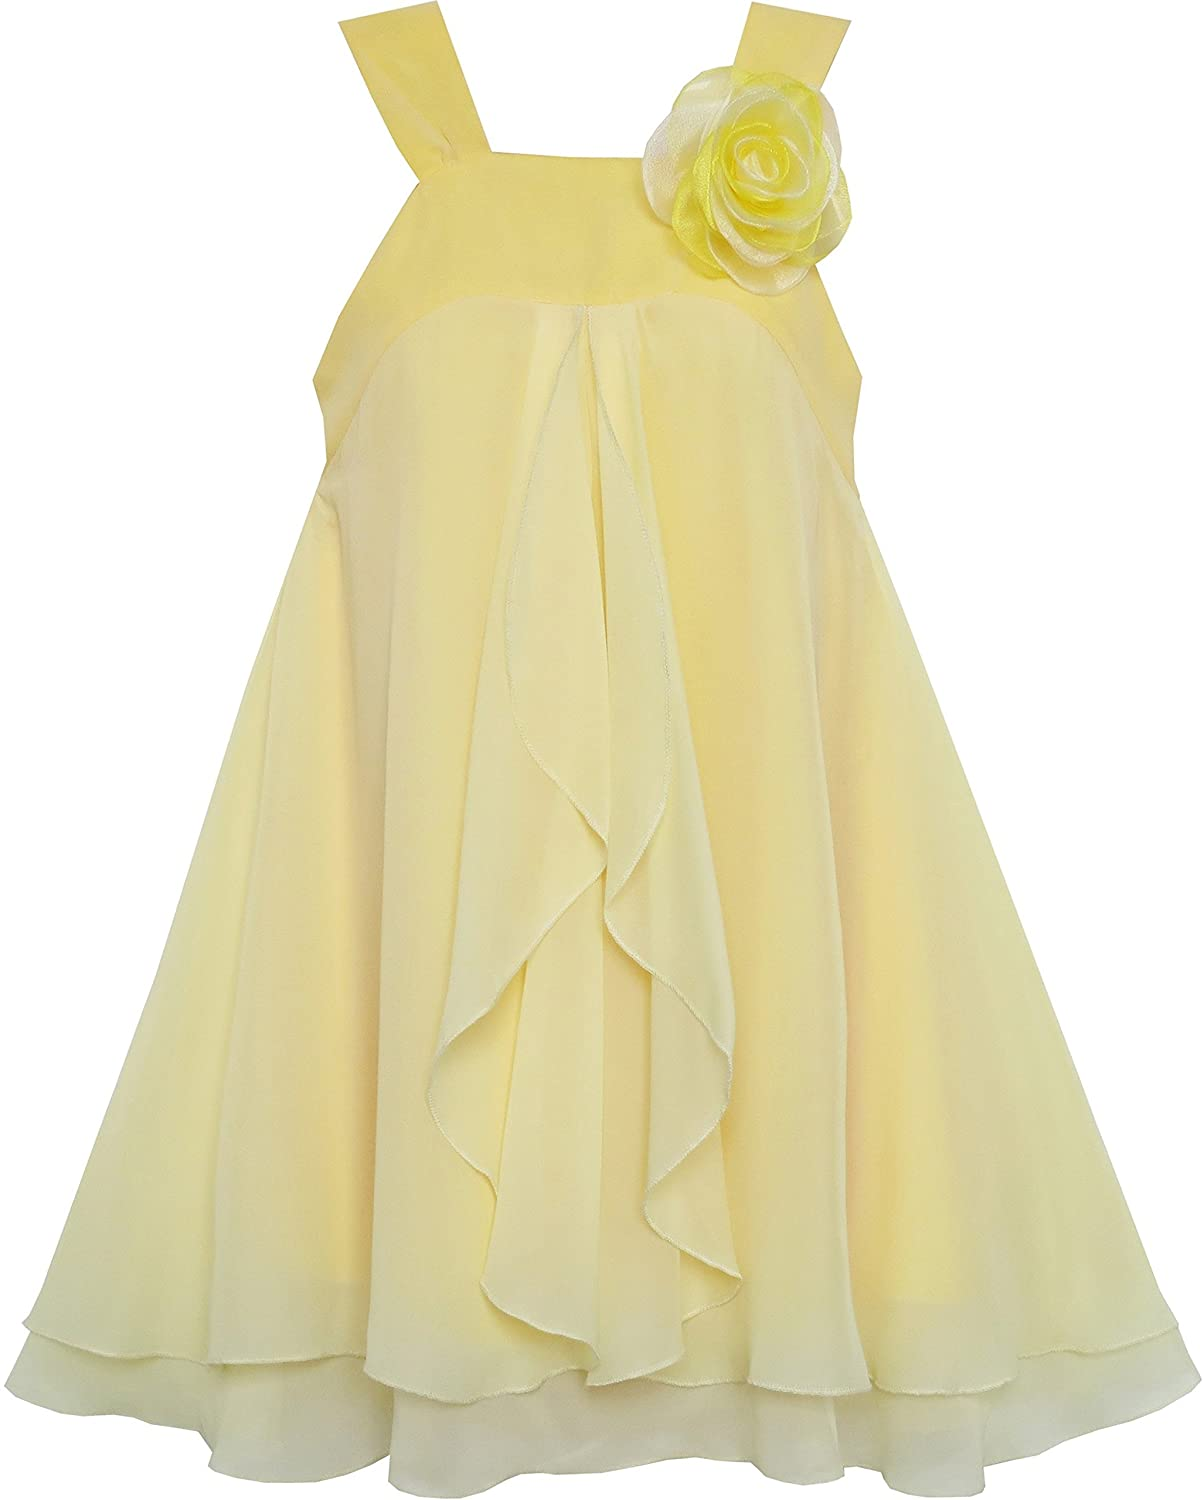 Sleeveless Halter Flower Multi Layer Chiffon Dress for Girls, Zipper Closure